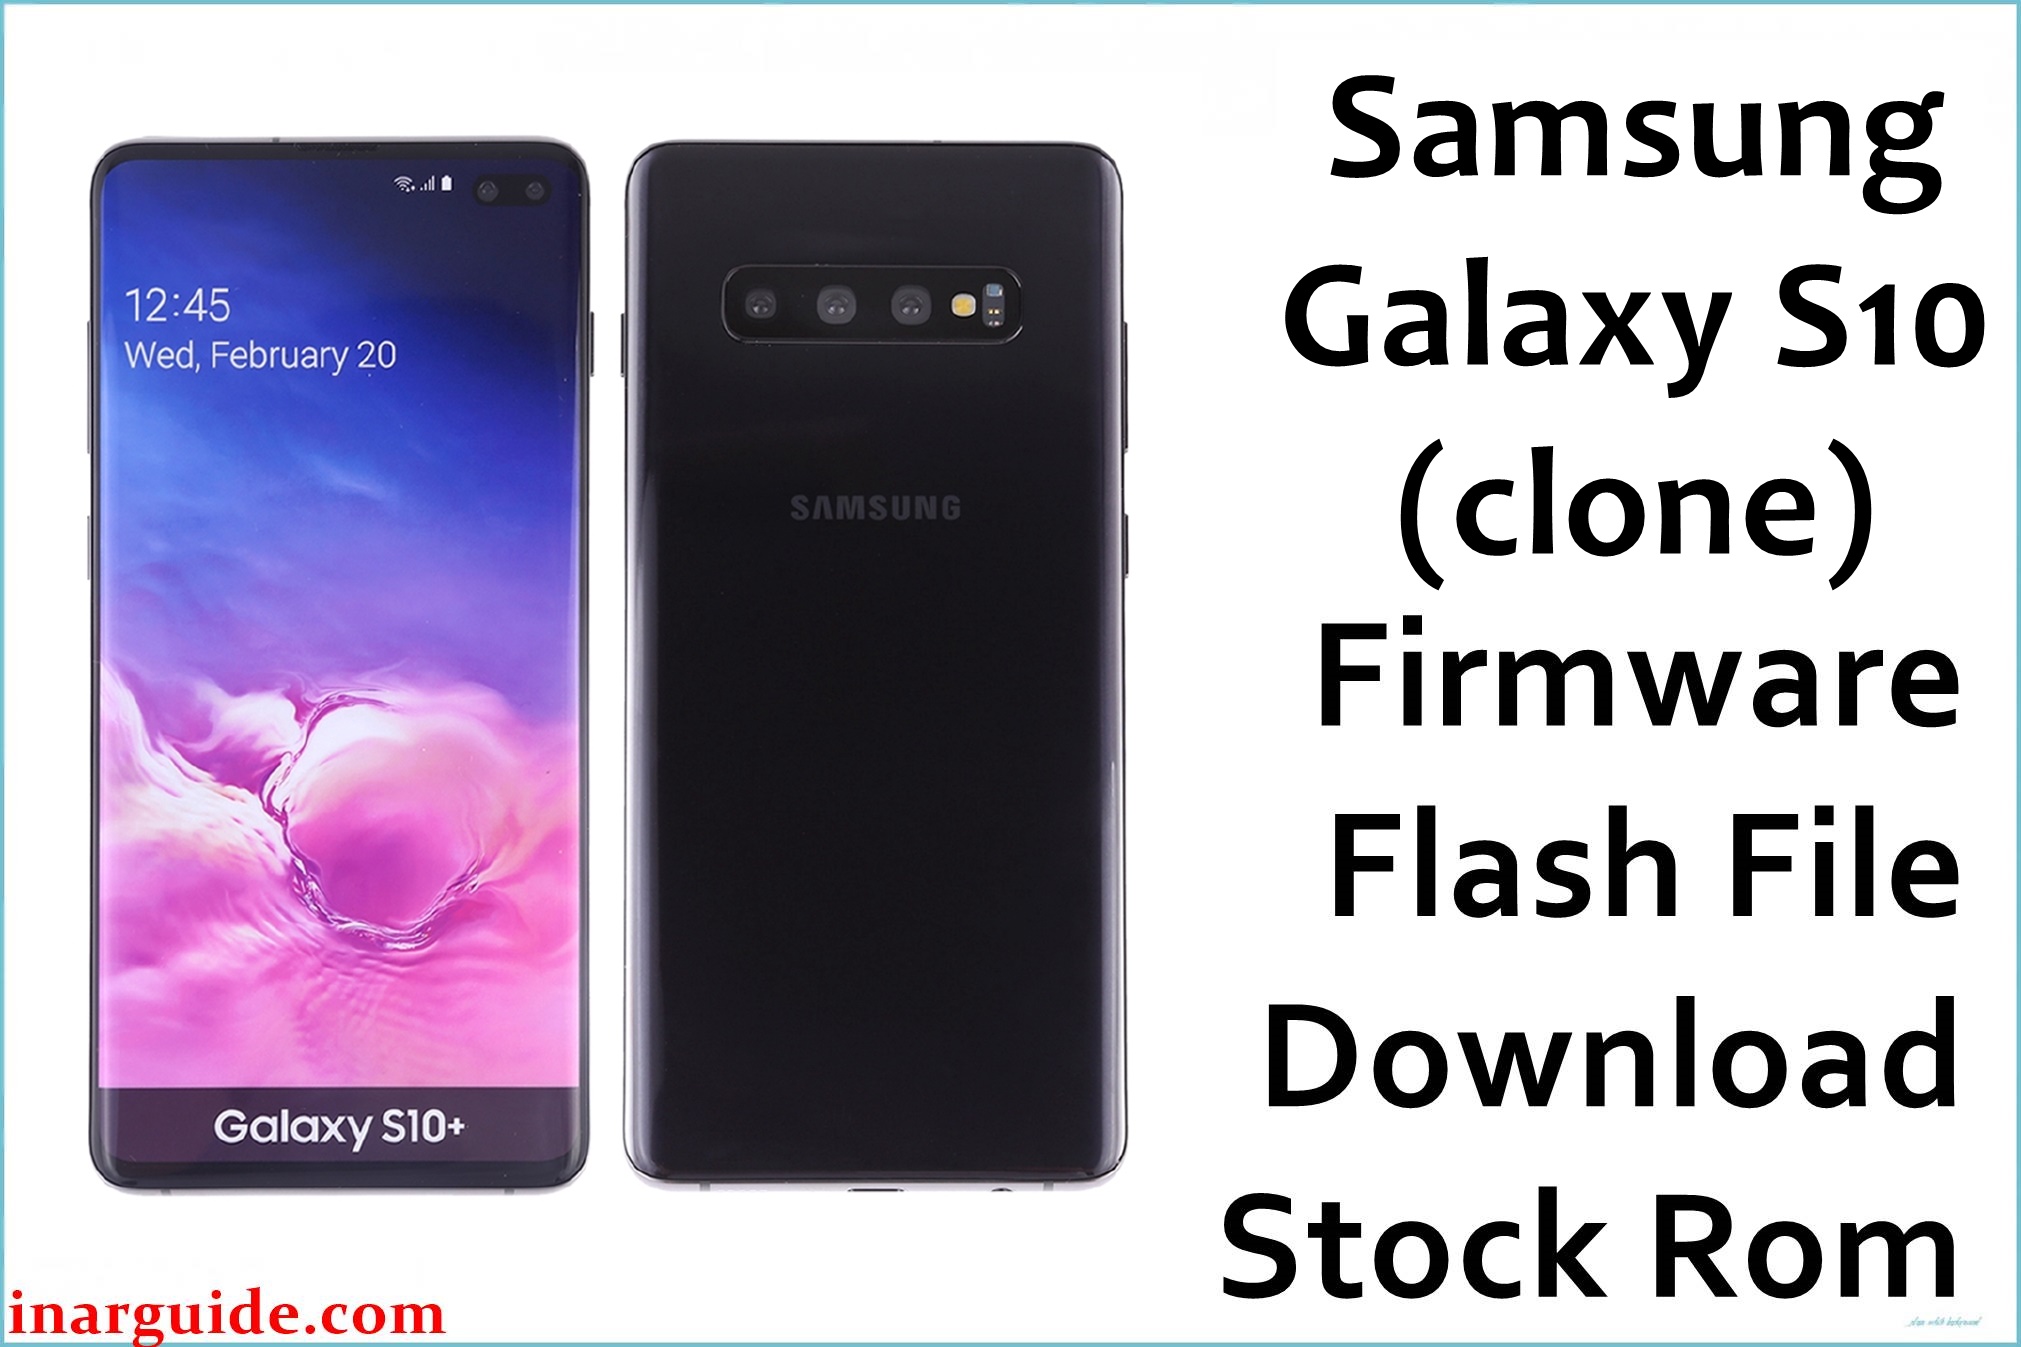 Samsung Galaxy S10 clone